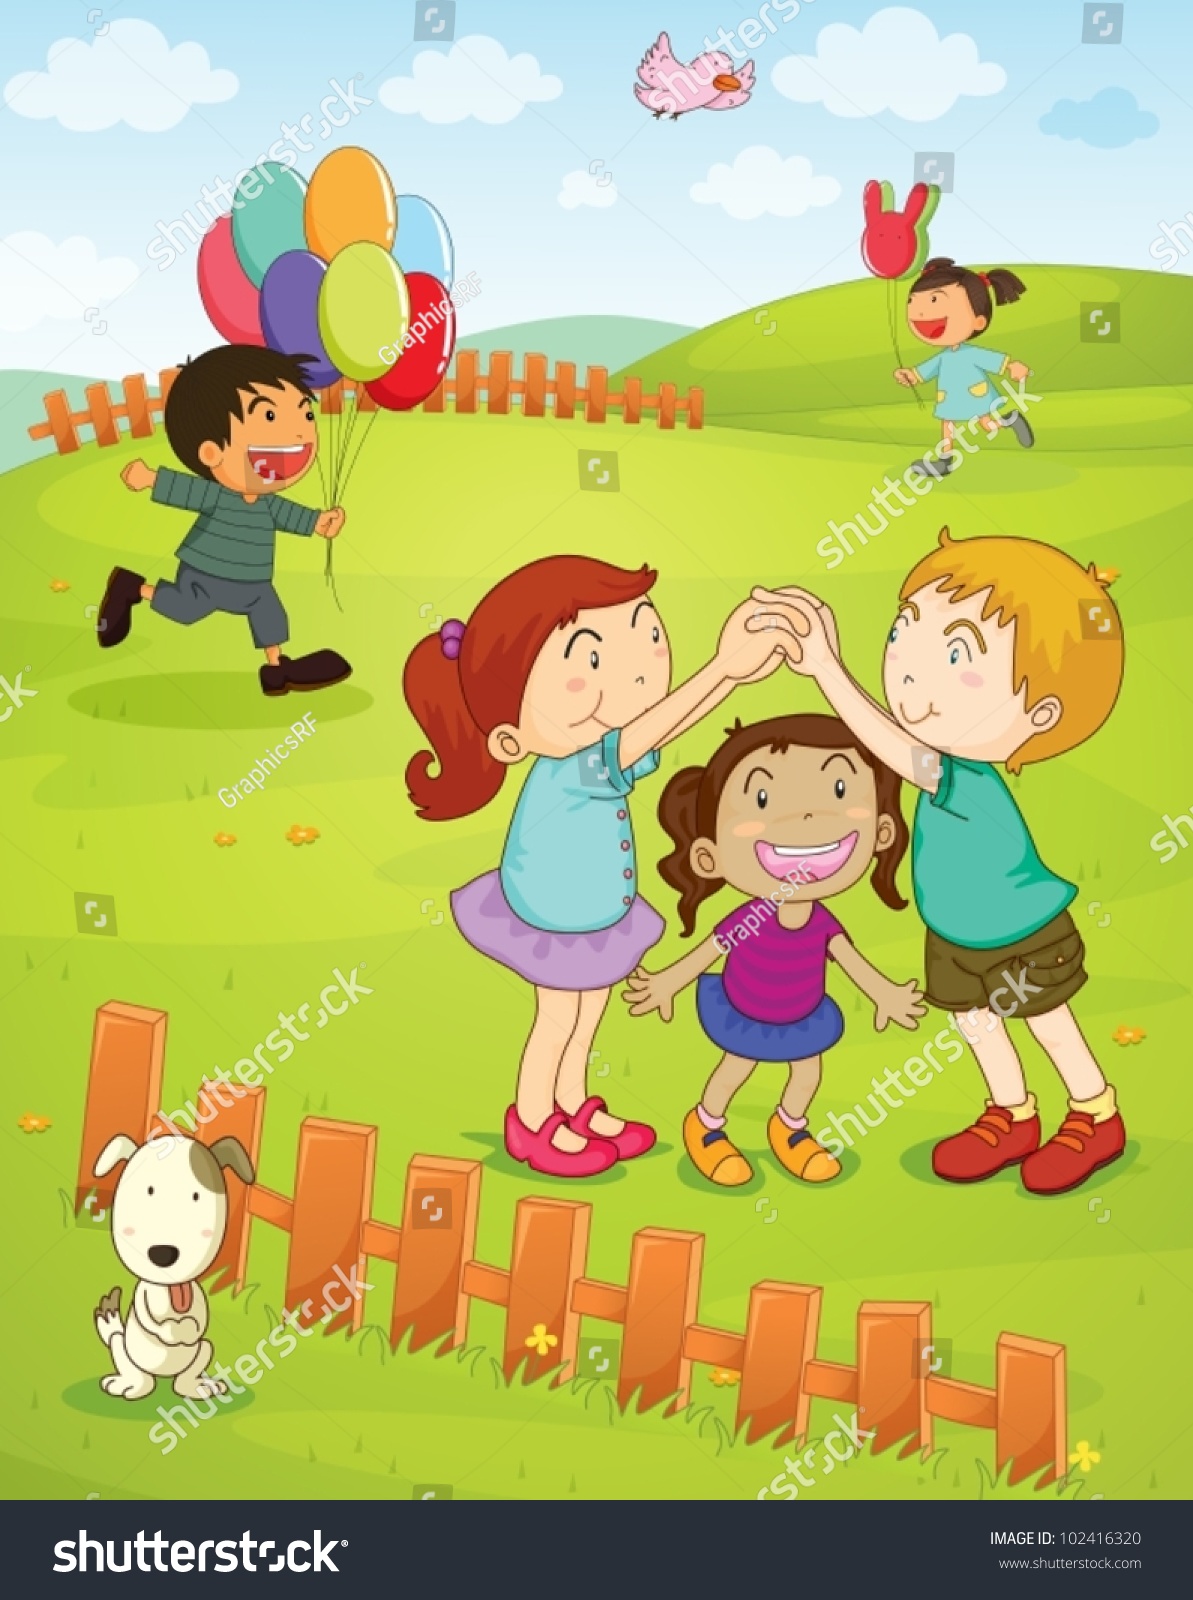 Illustration Kids Playing Park Stock Vector 102416320 - Shutterstock